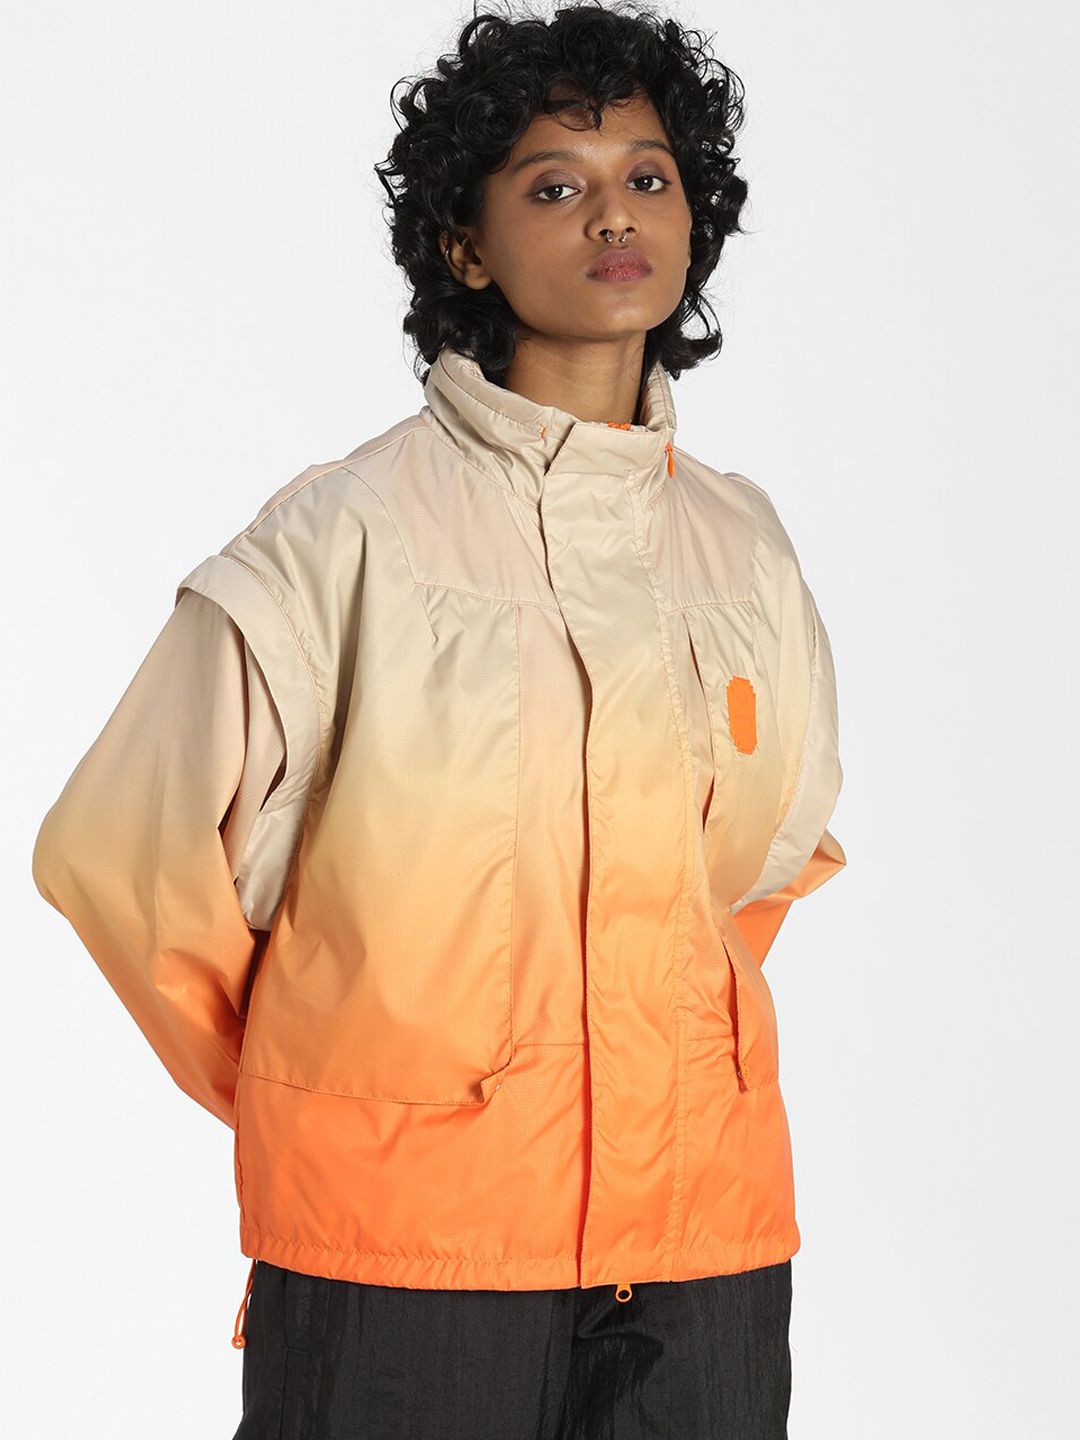 Puma Women Orange Solid Open Front Jacket Price in India